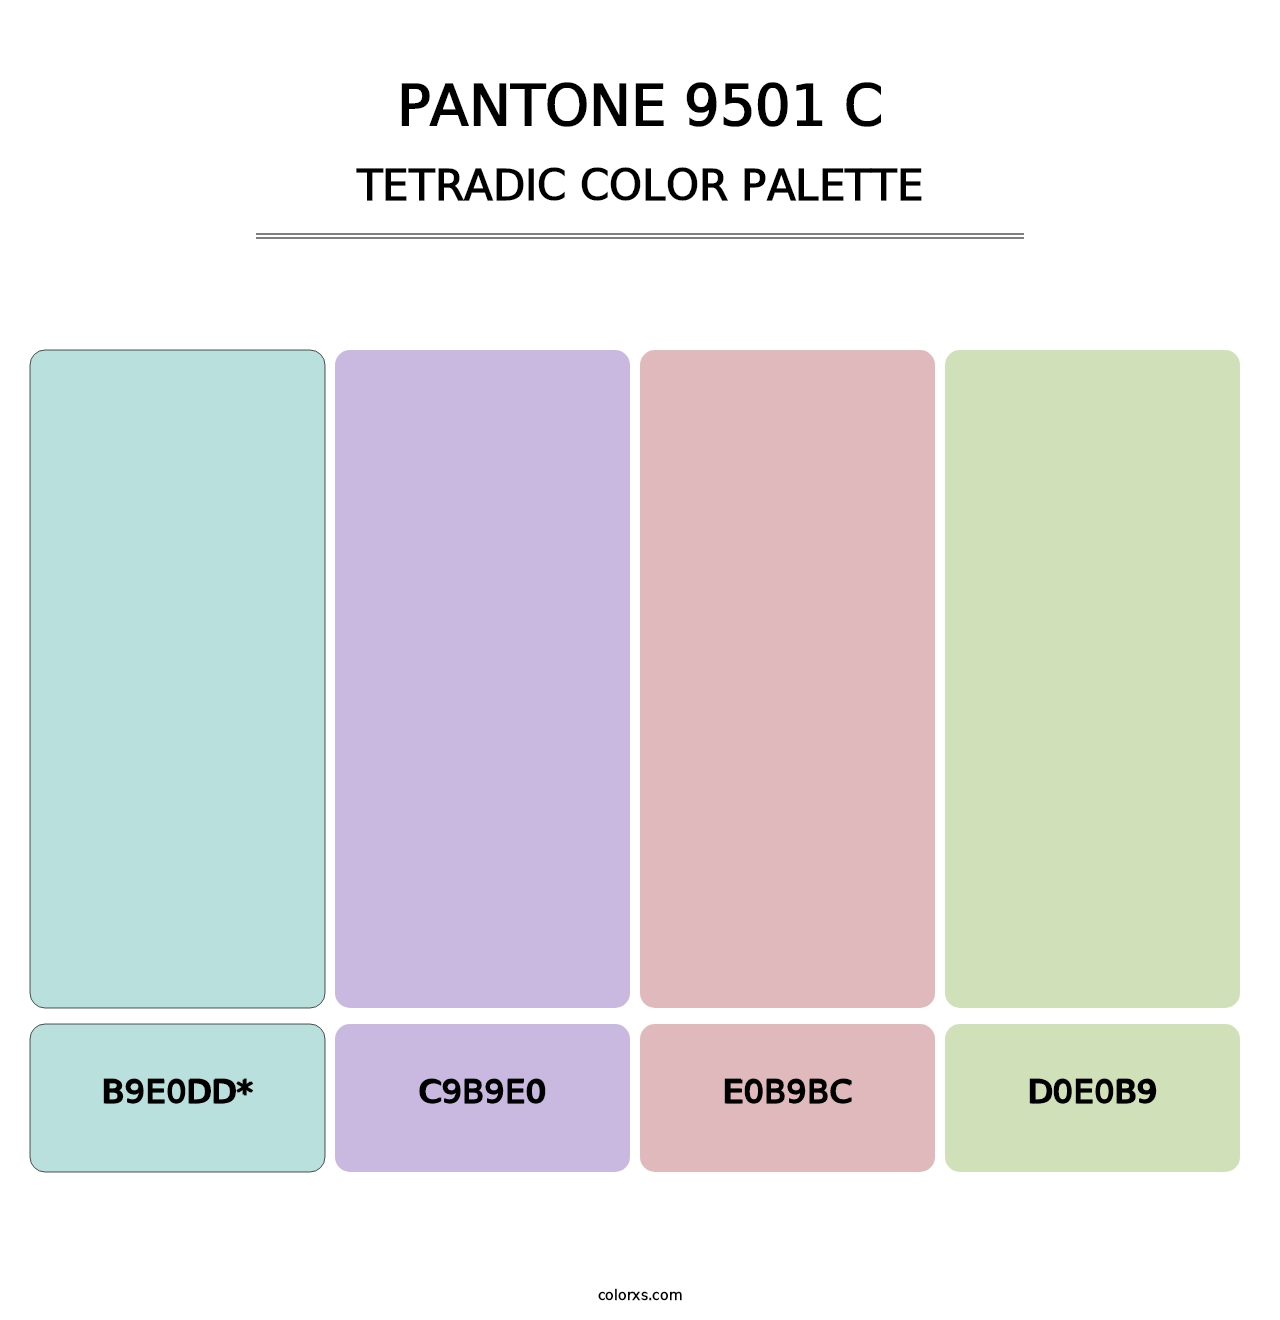 PANTONE 9501 C - Tetradic Color Palette